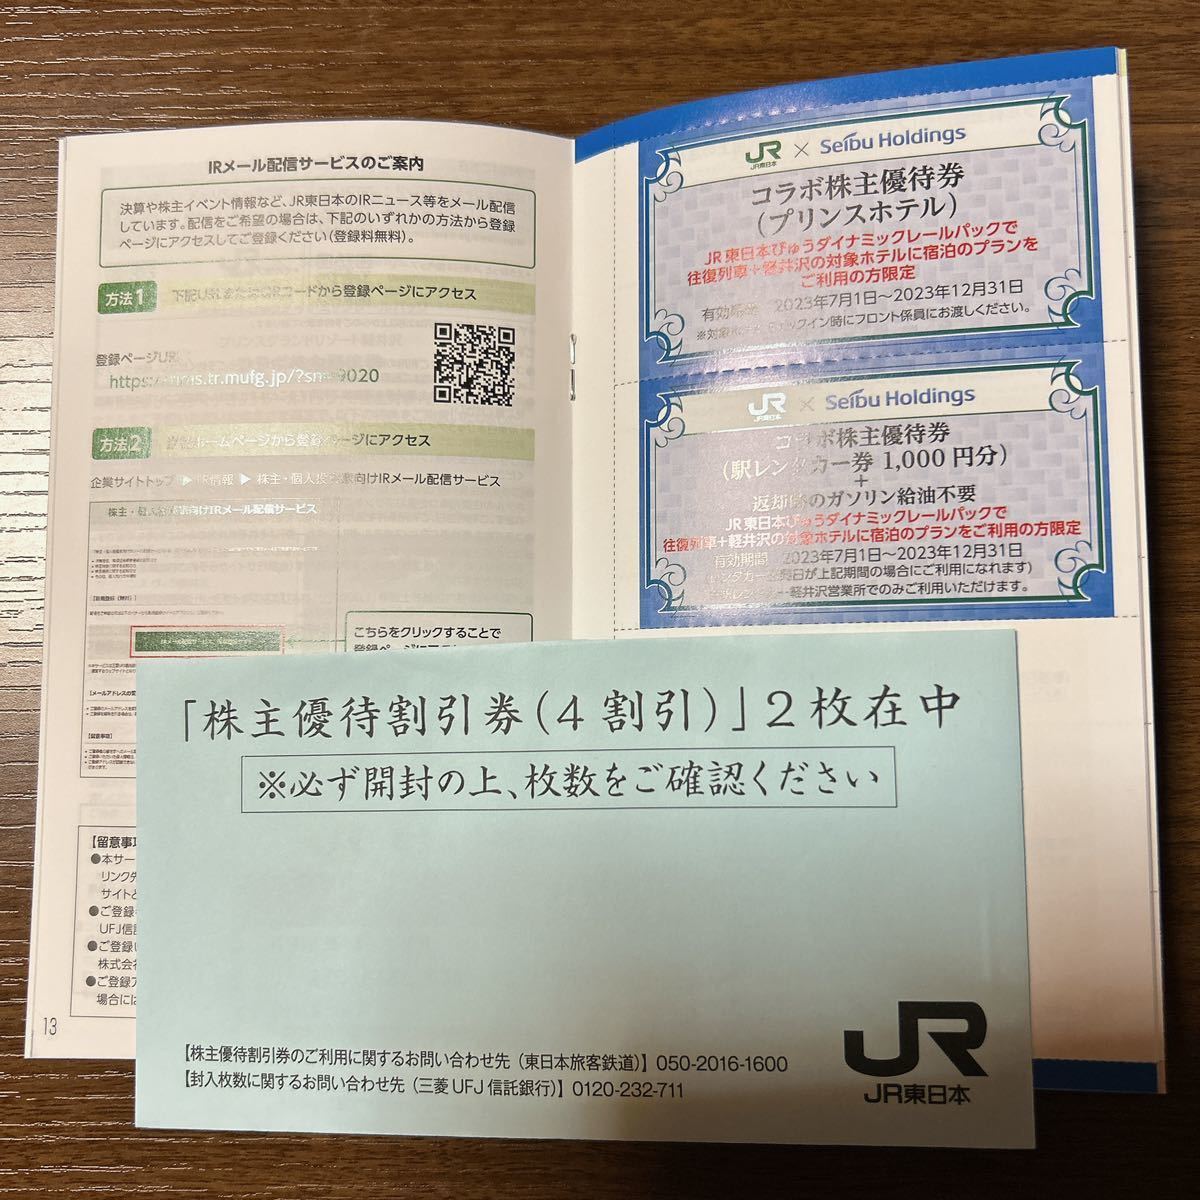 JR East Japan stockholder hospitality discount ticket 2 sheets stockholder service ticket 2024 year 6 month 30 until the day 